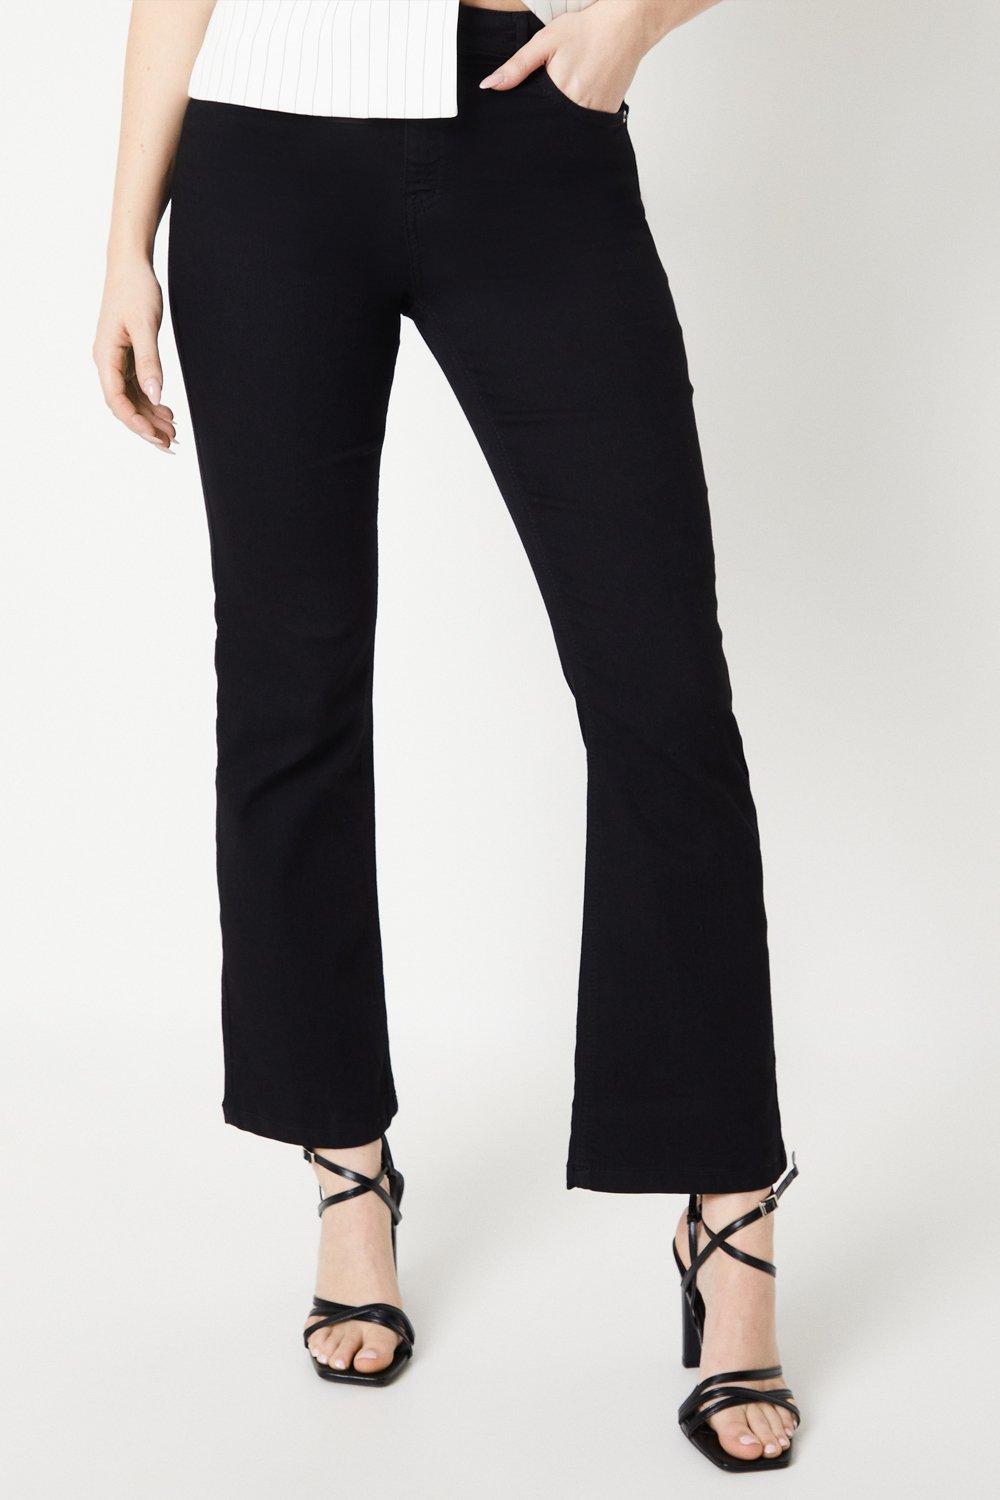 Women’s Comfort Stretch Bootcut Jeans - black - 8